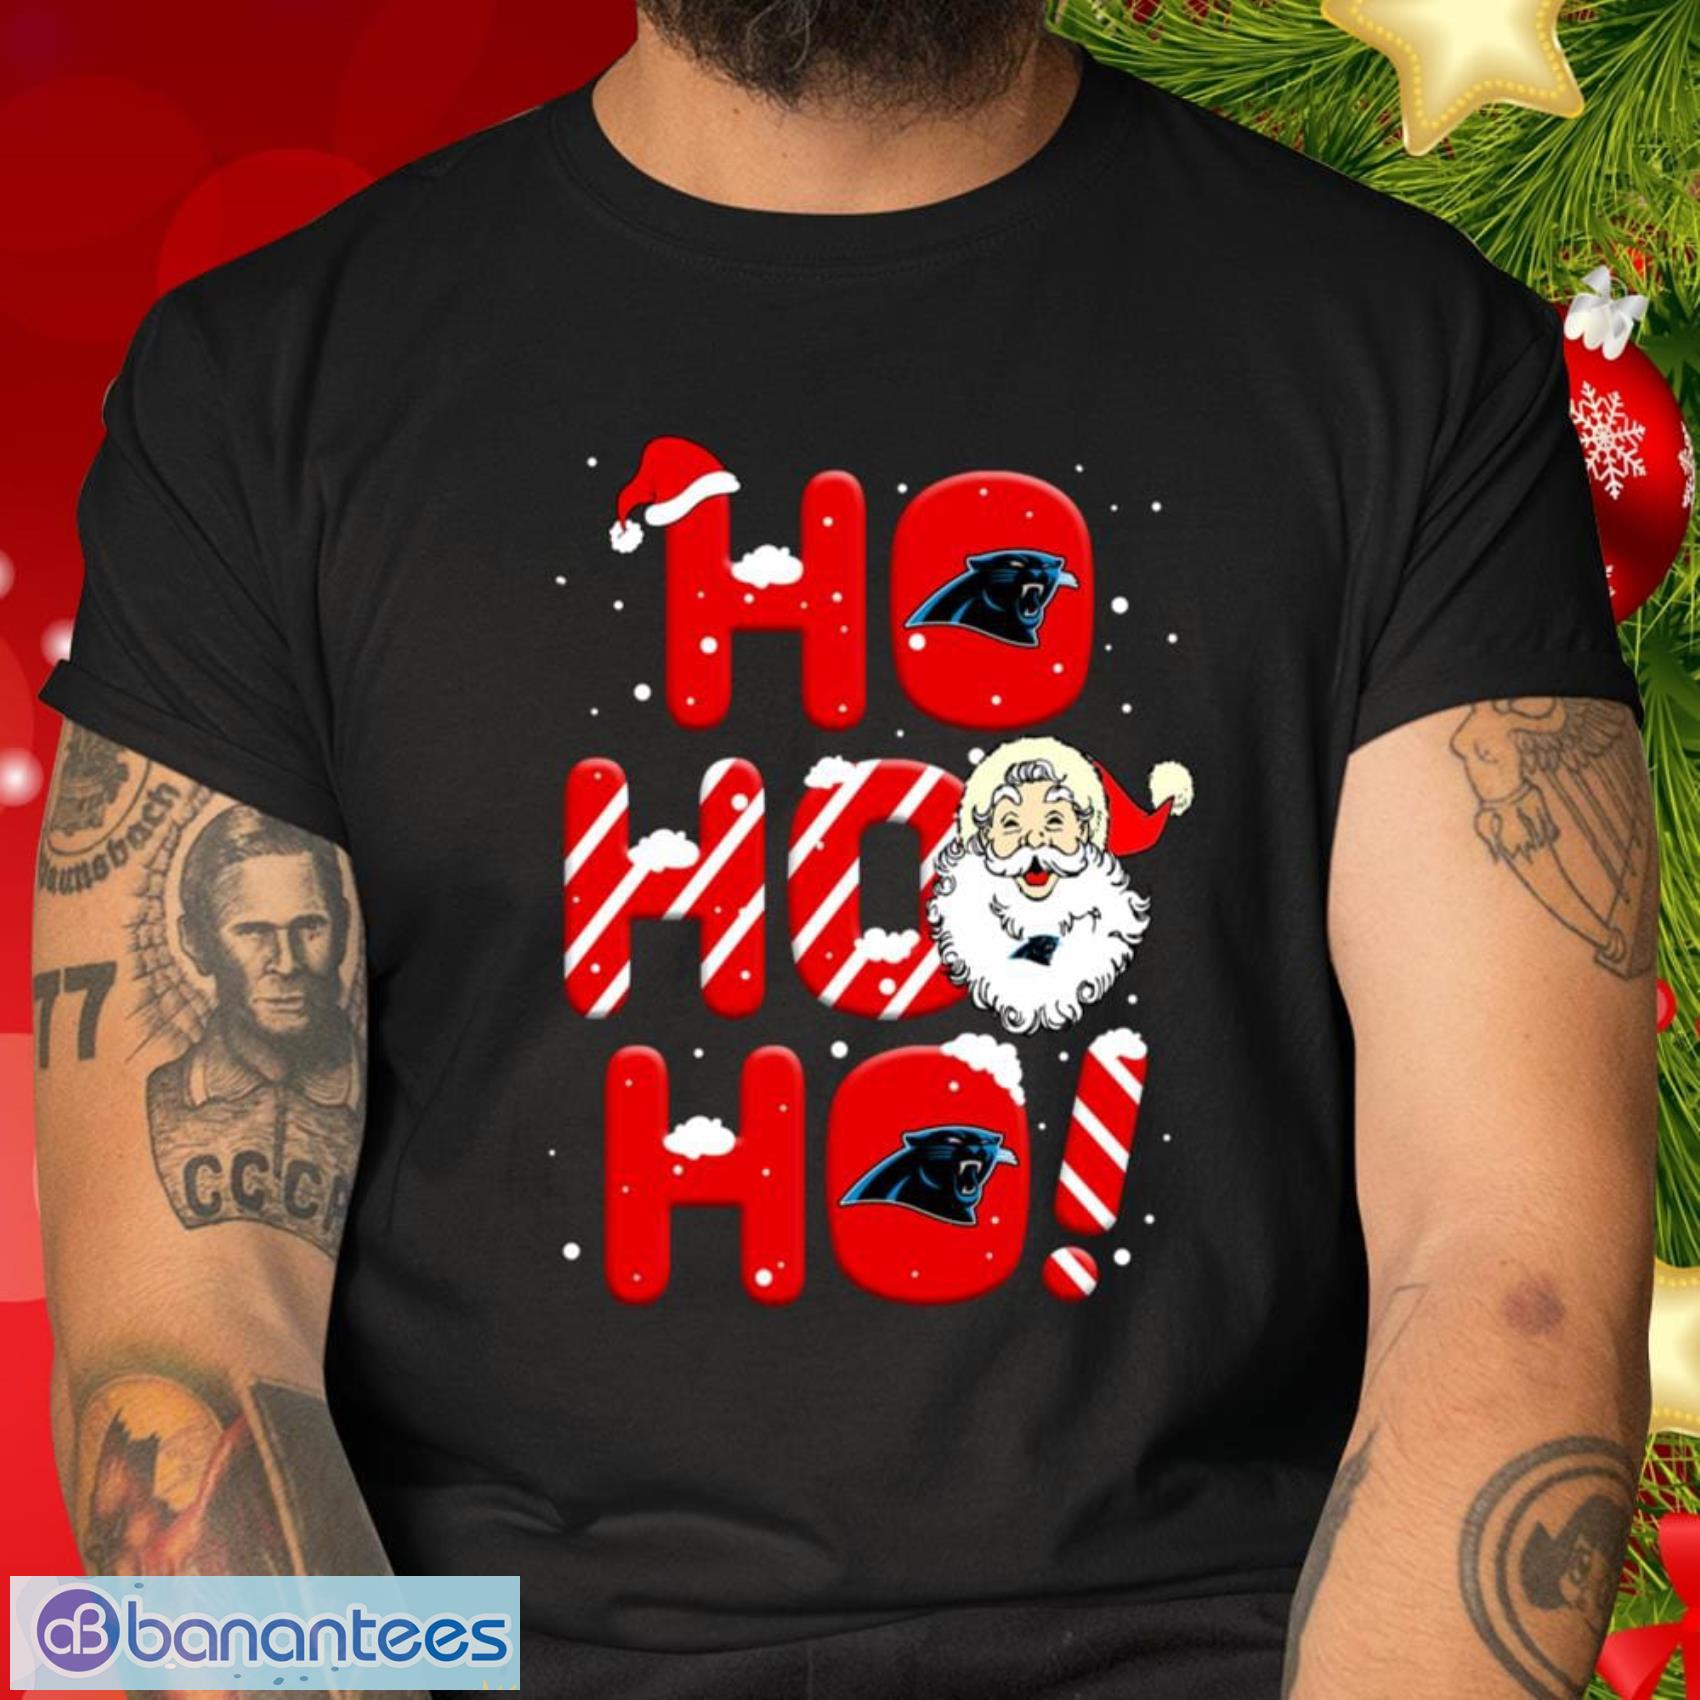 Carolina Panthers NFL Football Gift Fr Fans Ho Ho Ho Santa Claus Merry Christmas Shirt T Shirt - Carolina Panthers NFL Football Ho Ho Ho Santa Claus Merry Christmas Shirt T Shirt_1